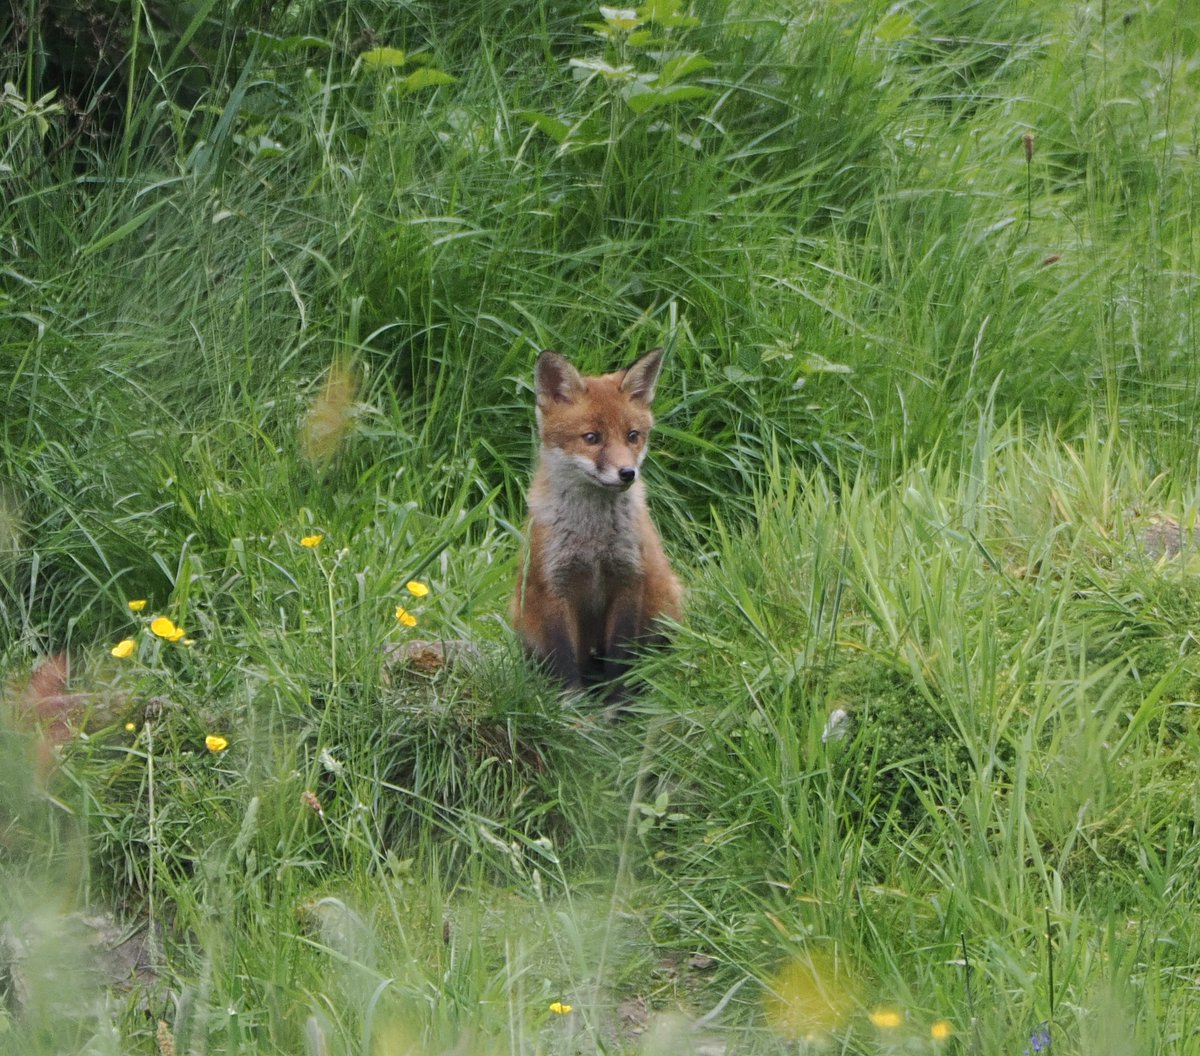 Fox in a spring meadow. #ThePhotoHour #TwitterNaturePhotography #wildlife #naturephoto #FoxOfTheDay